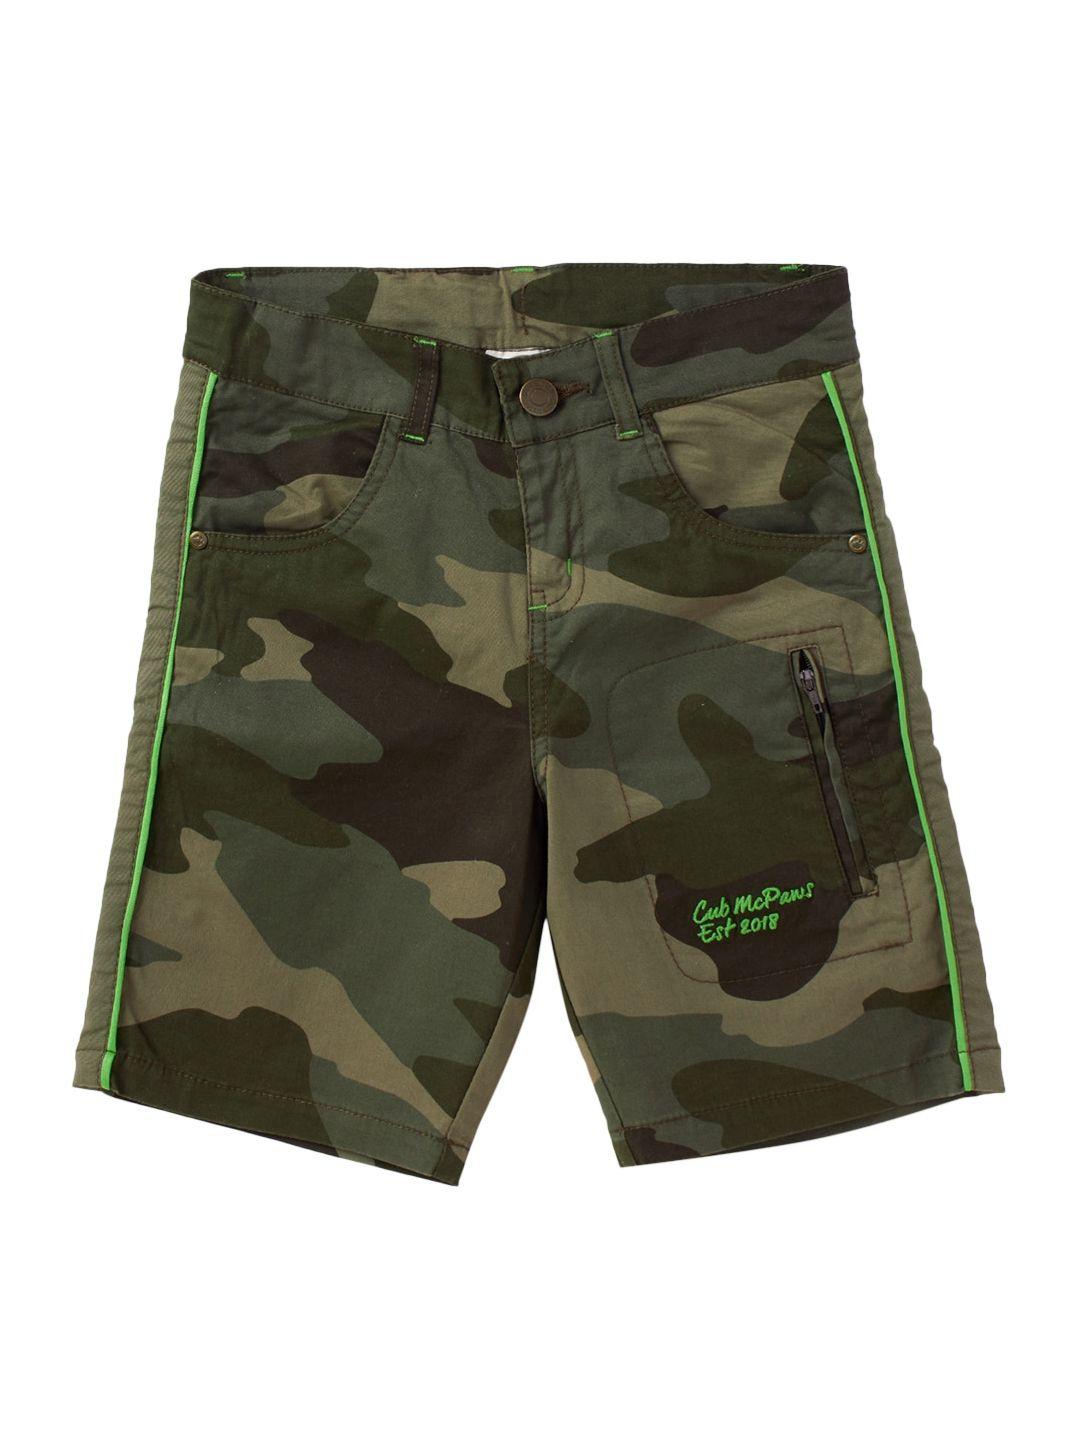 cub mcpaws boys multicoloured camouflage printed shorts